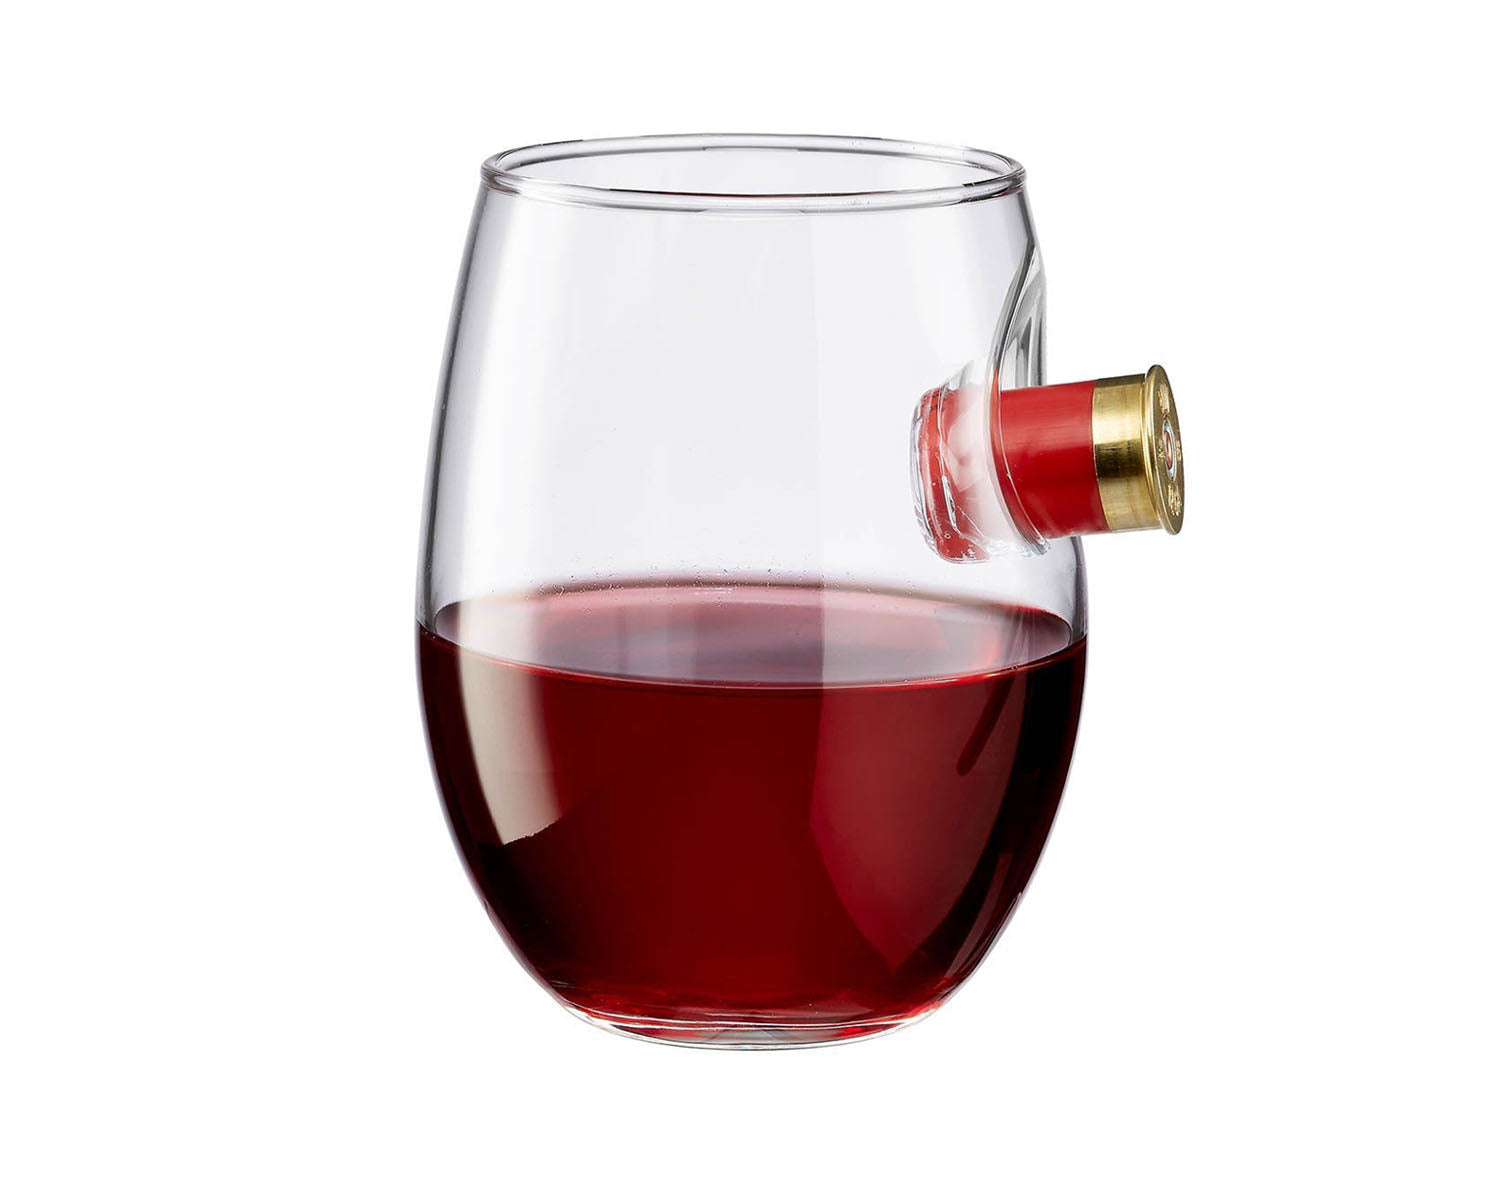 BenShot 15oz Wine Glass